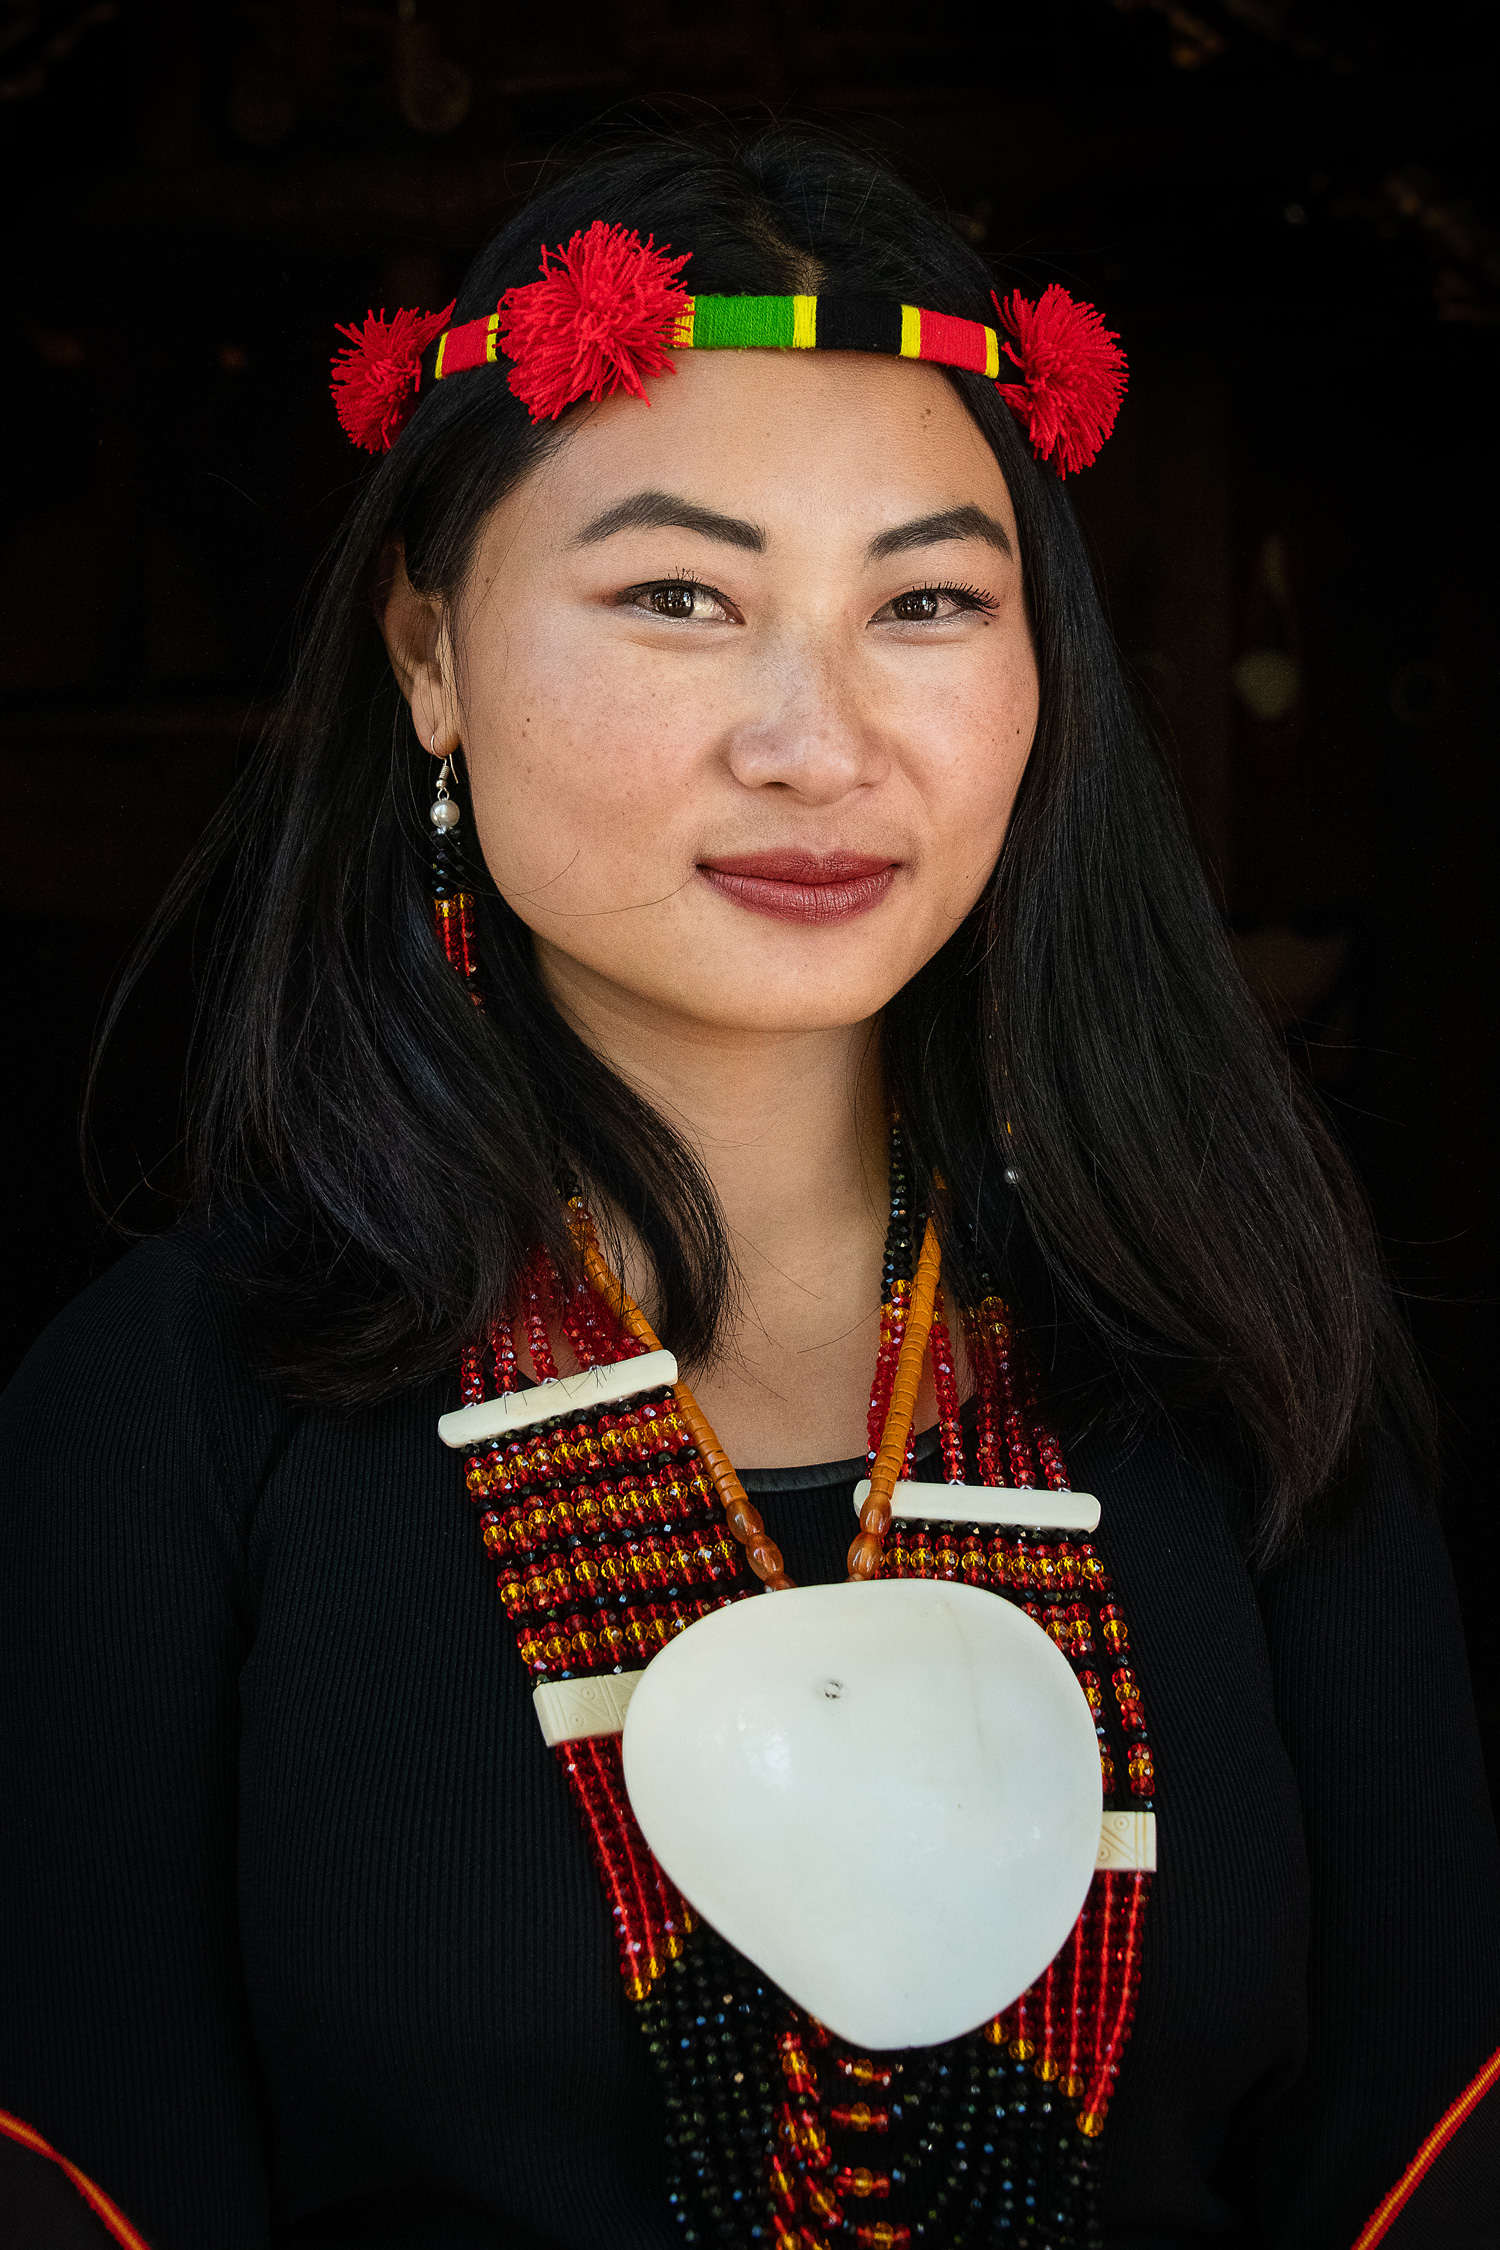 A Beautiful Naga girl in traditional attire